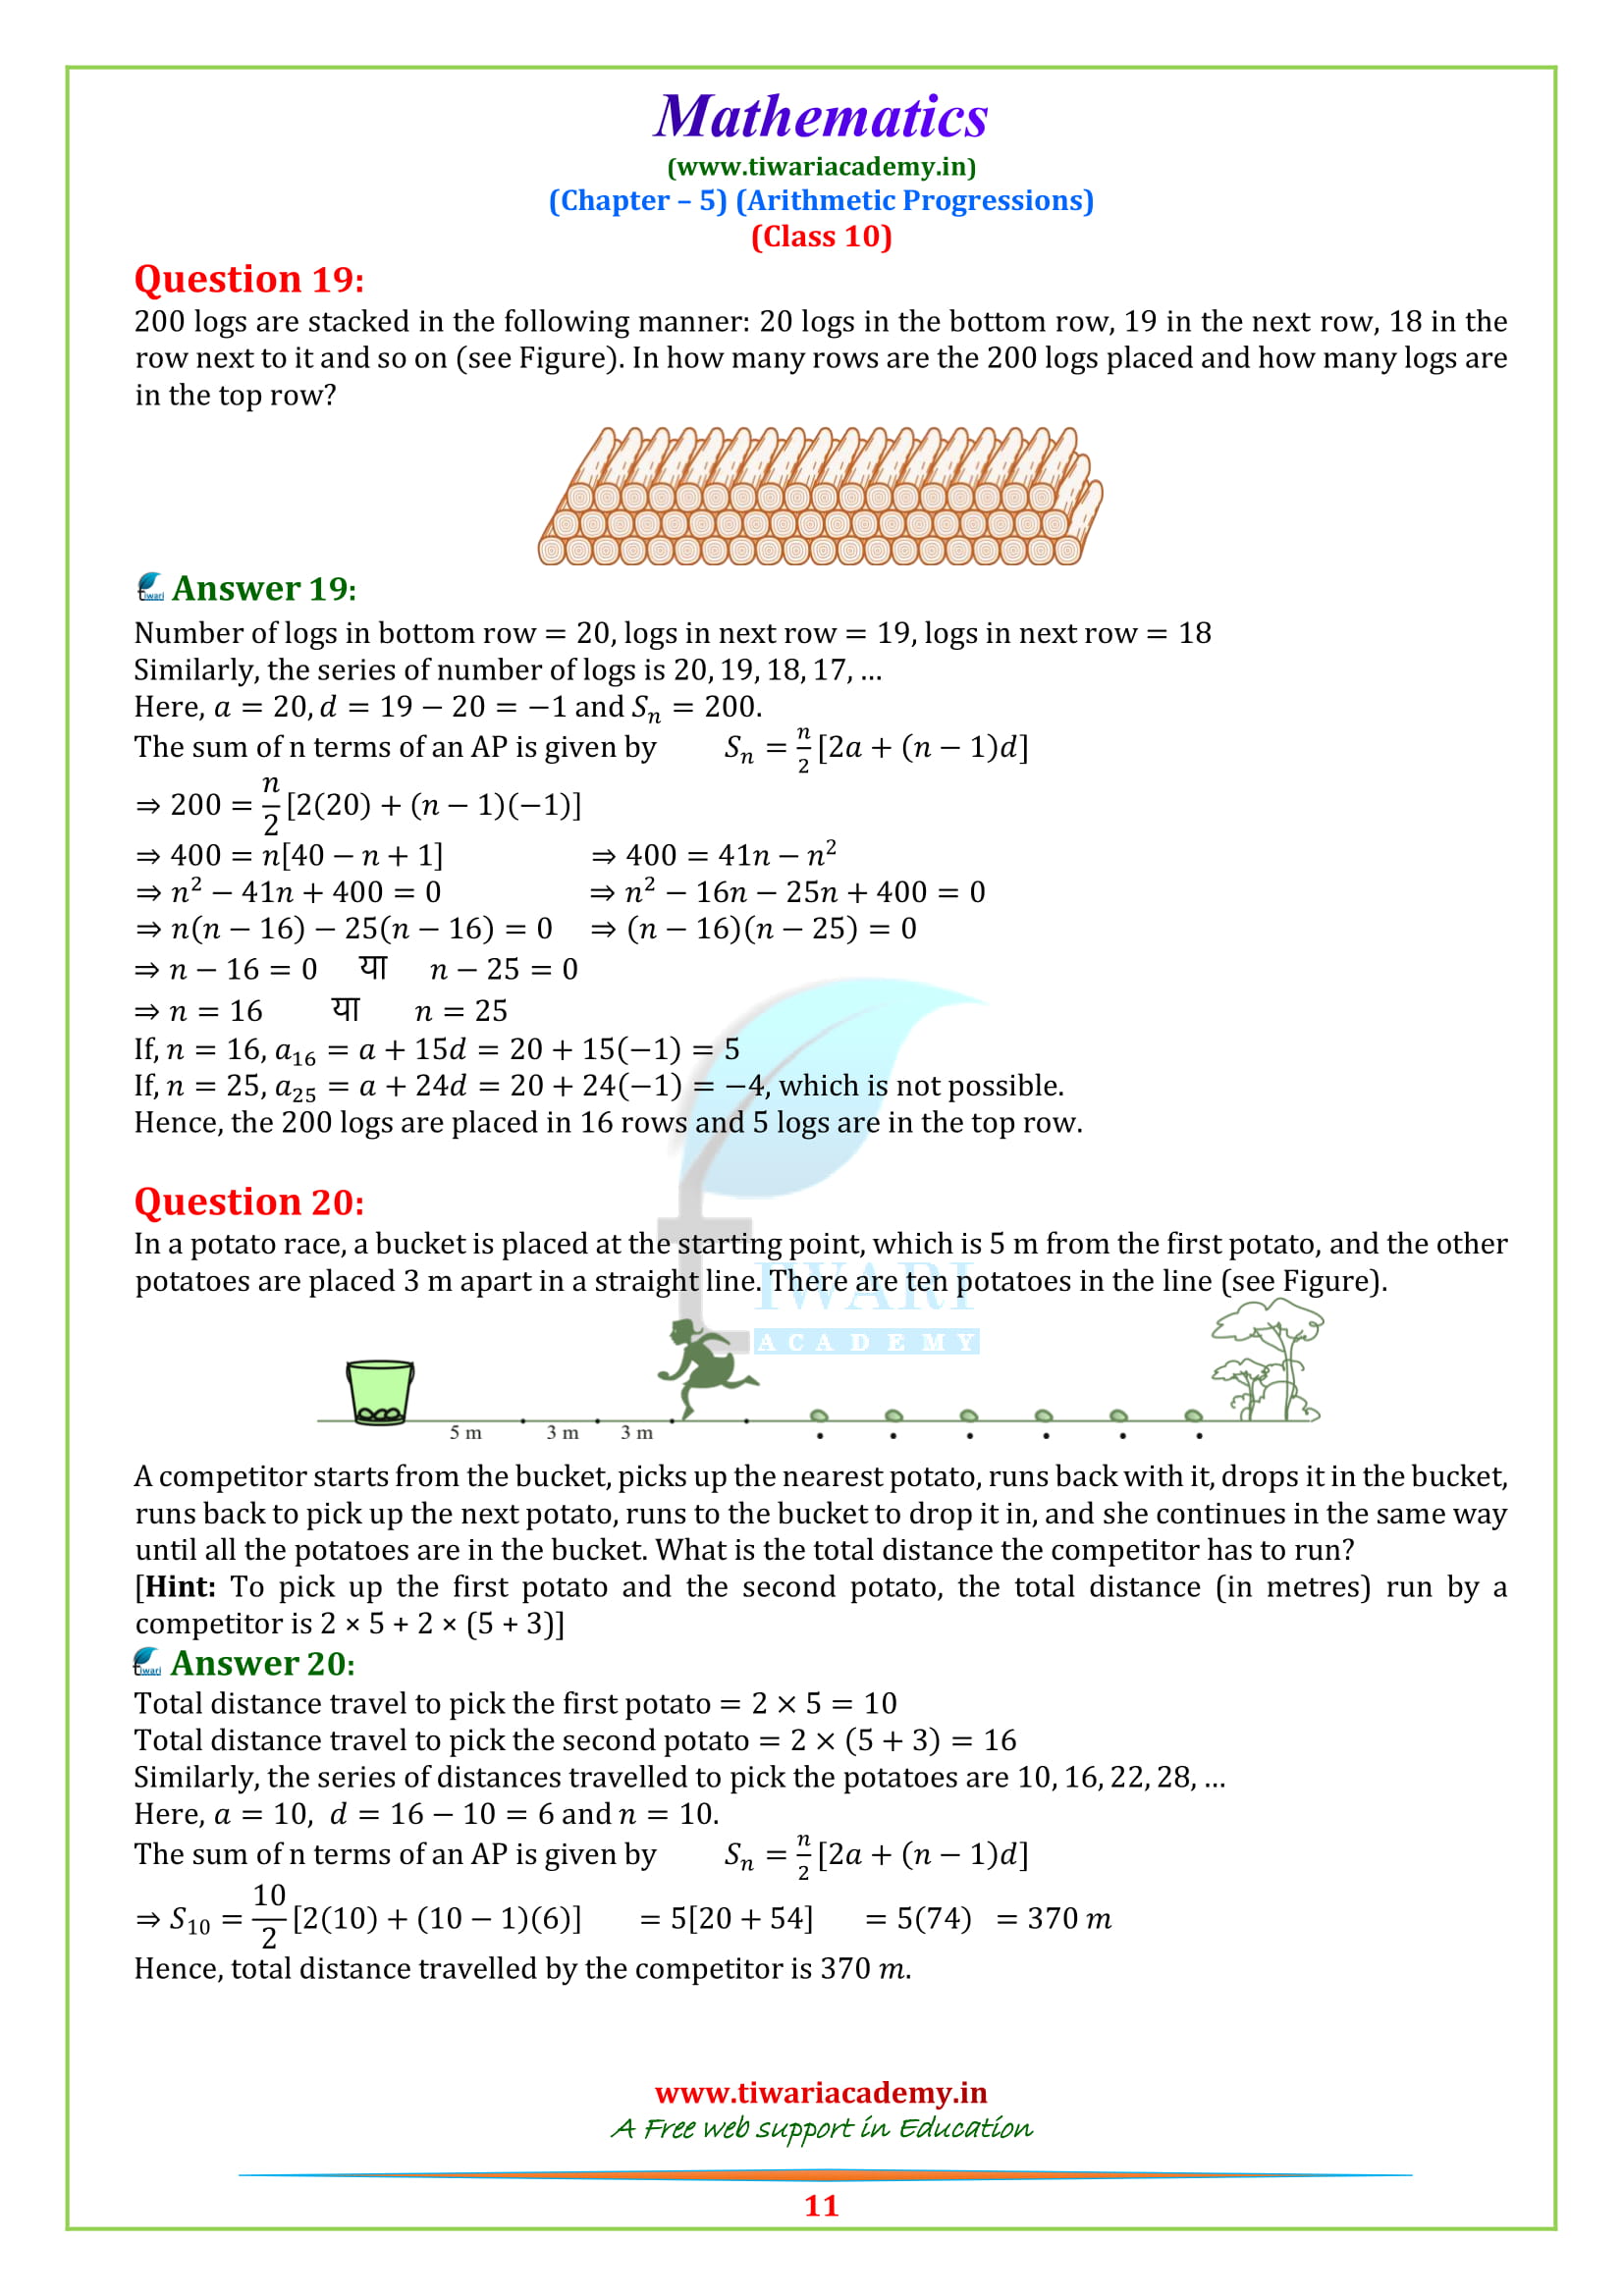 NCERT Sols for class 10 Maths exercise 5.3 complete descriptions